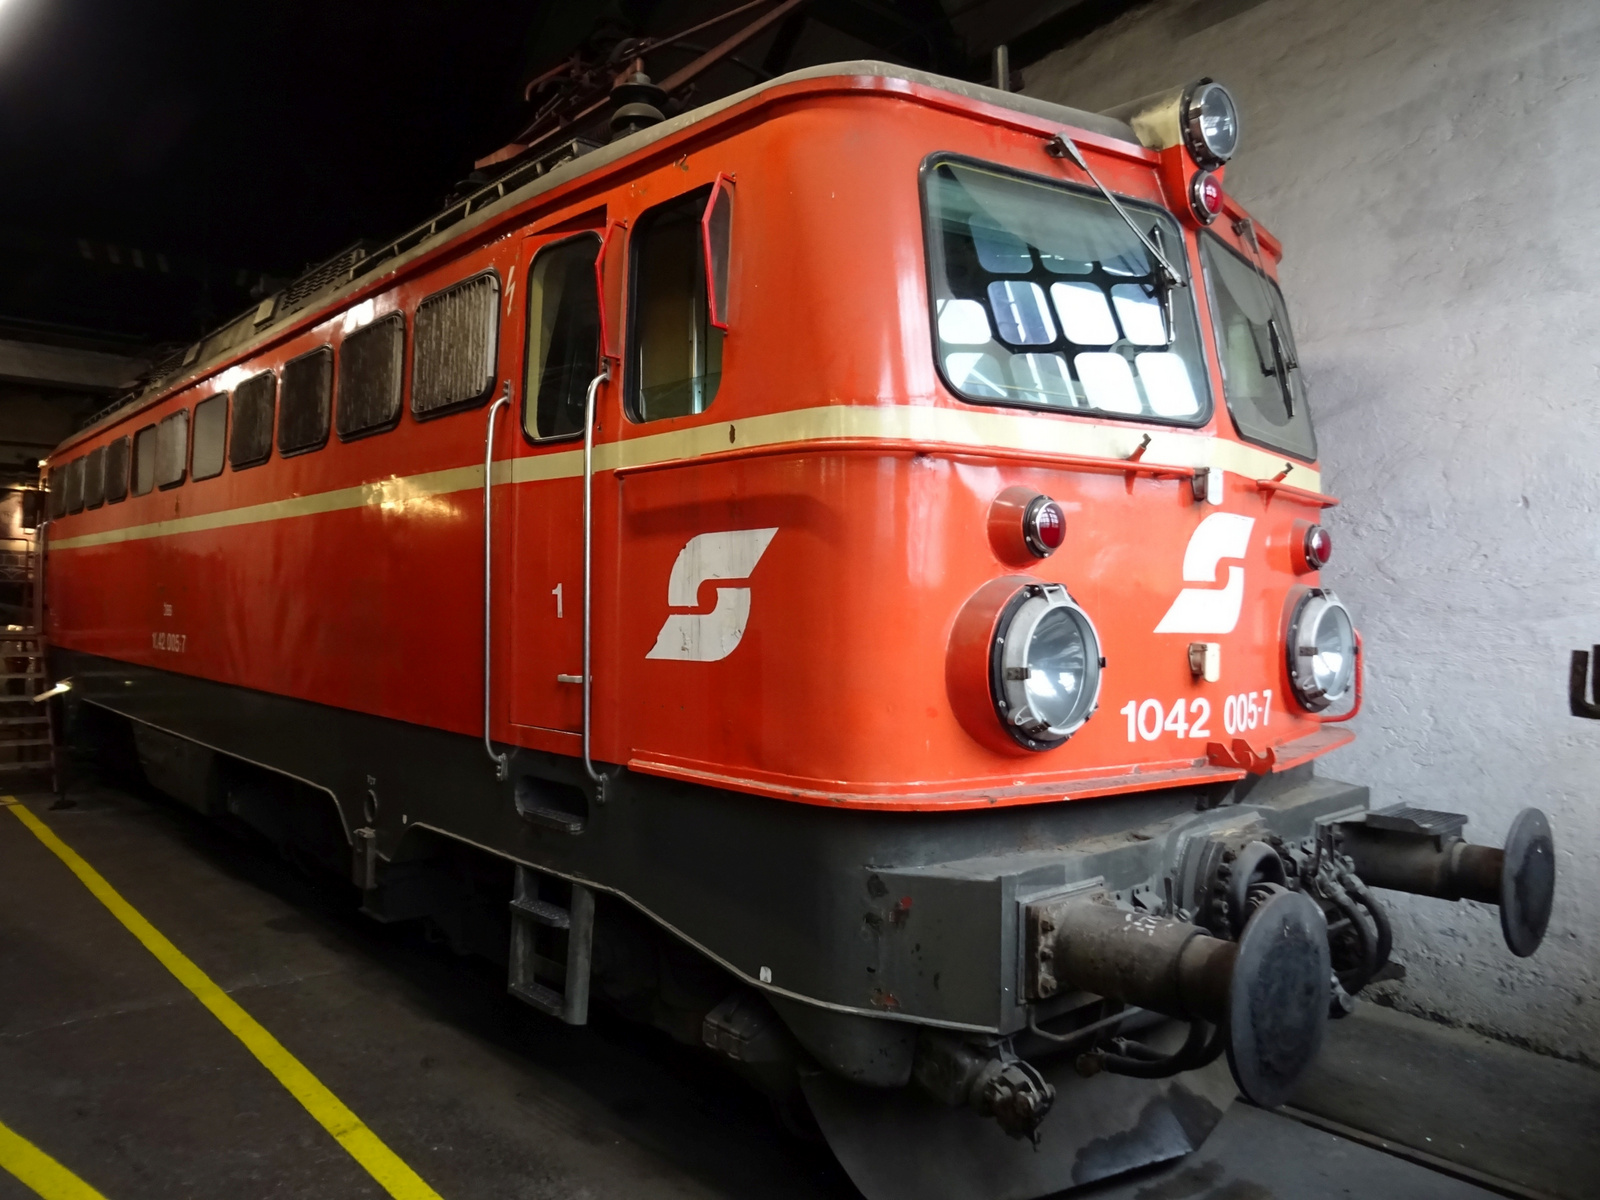 1042 005 - Südbahnmuseum, Mürzzuschlag